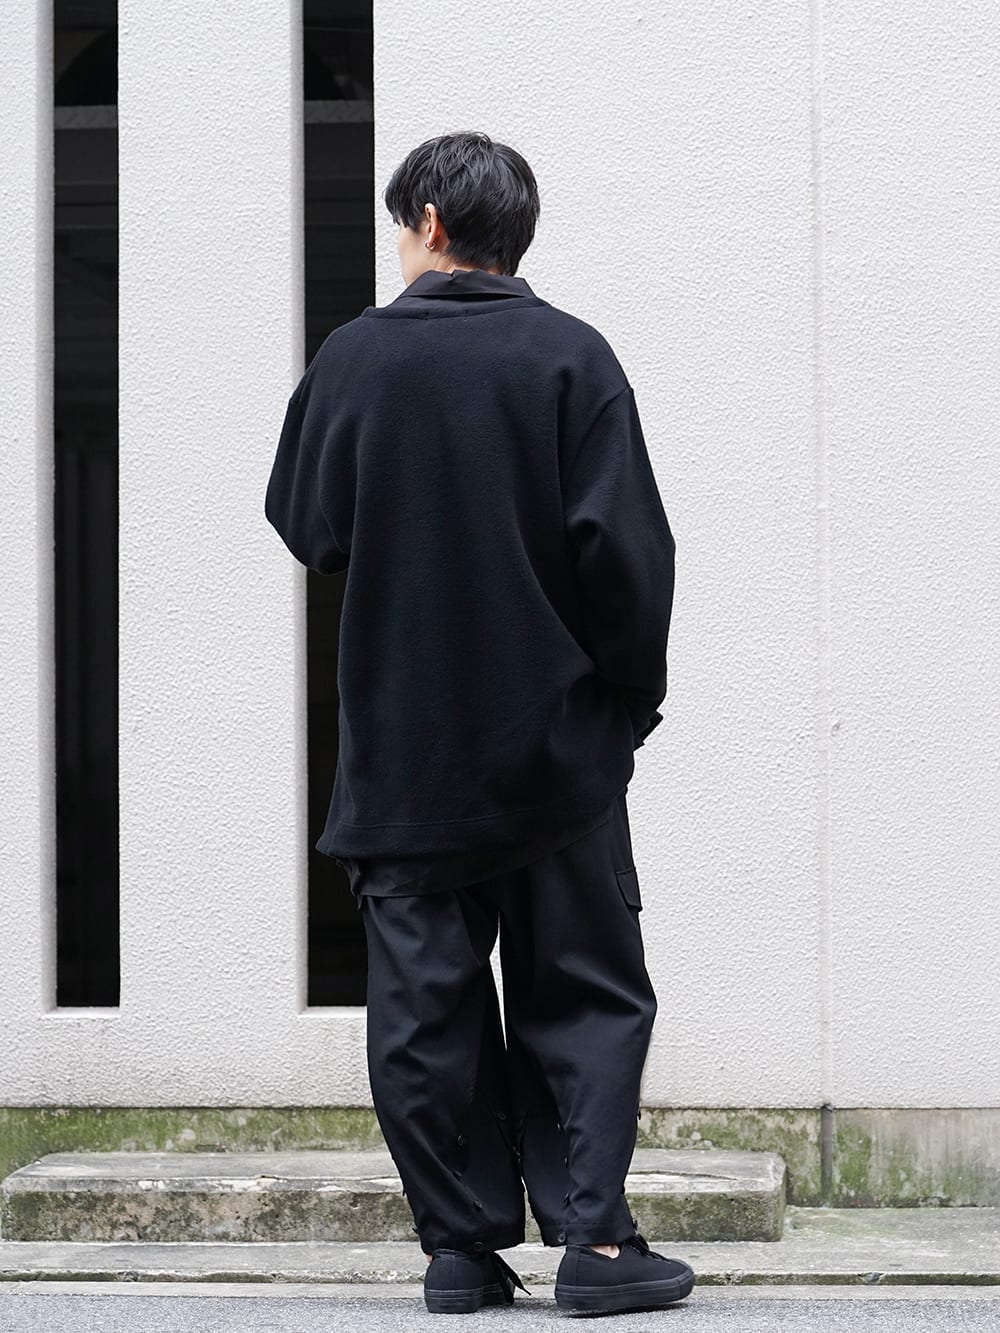 Yohji Yamamoto 19-20AW Wore Tops Over Shirts Style - FASCINATE BLOG